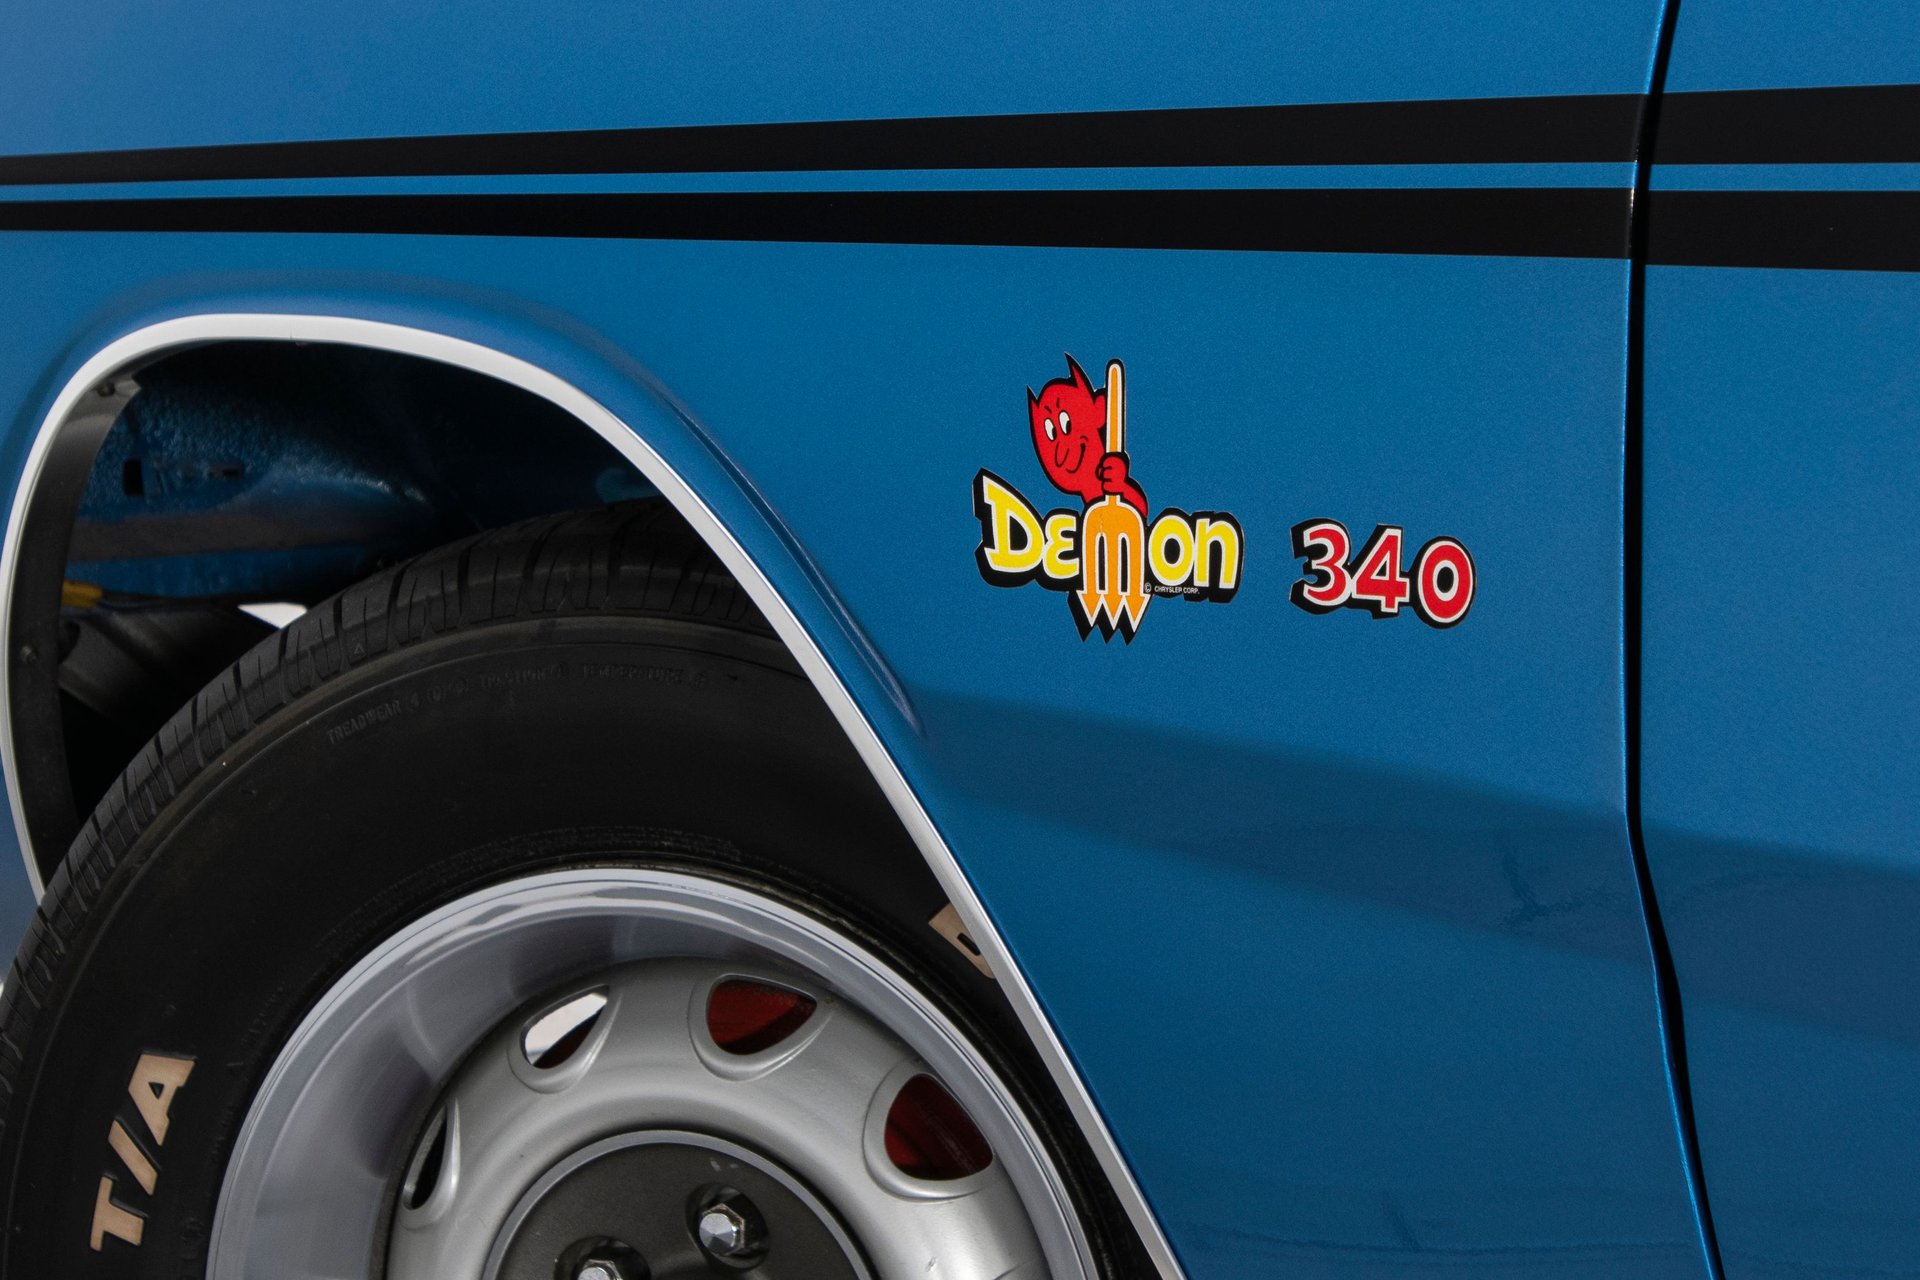 For Sale 1971 Dodge Demon